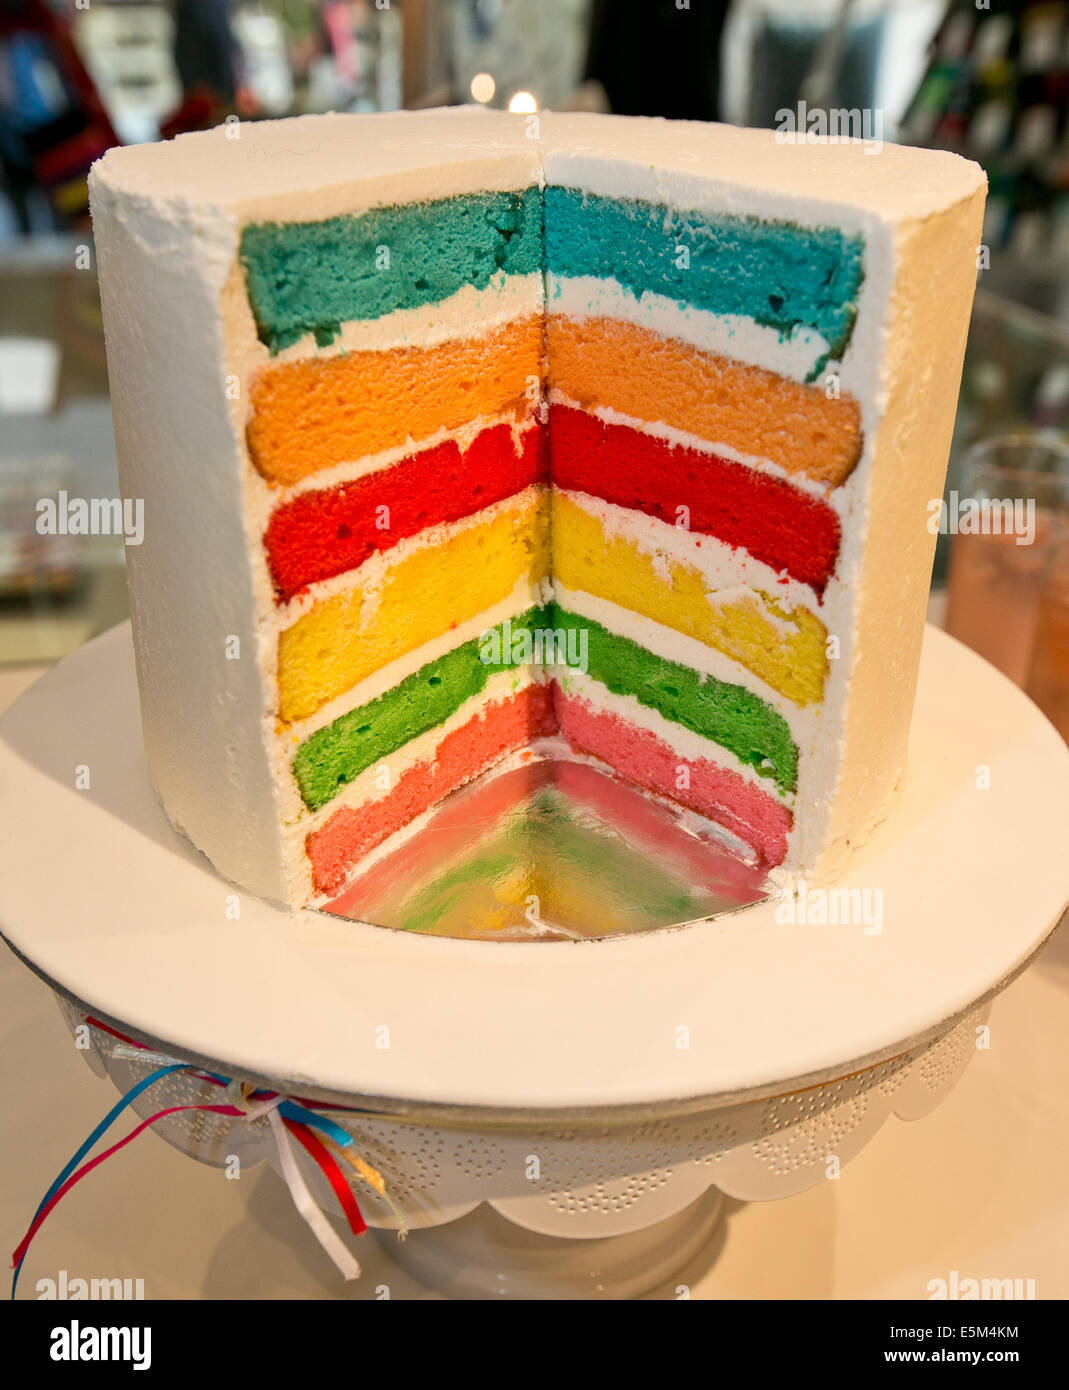 Rainbow coloured cake Stock Photo